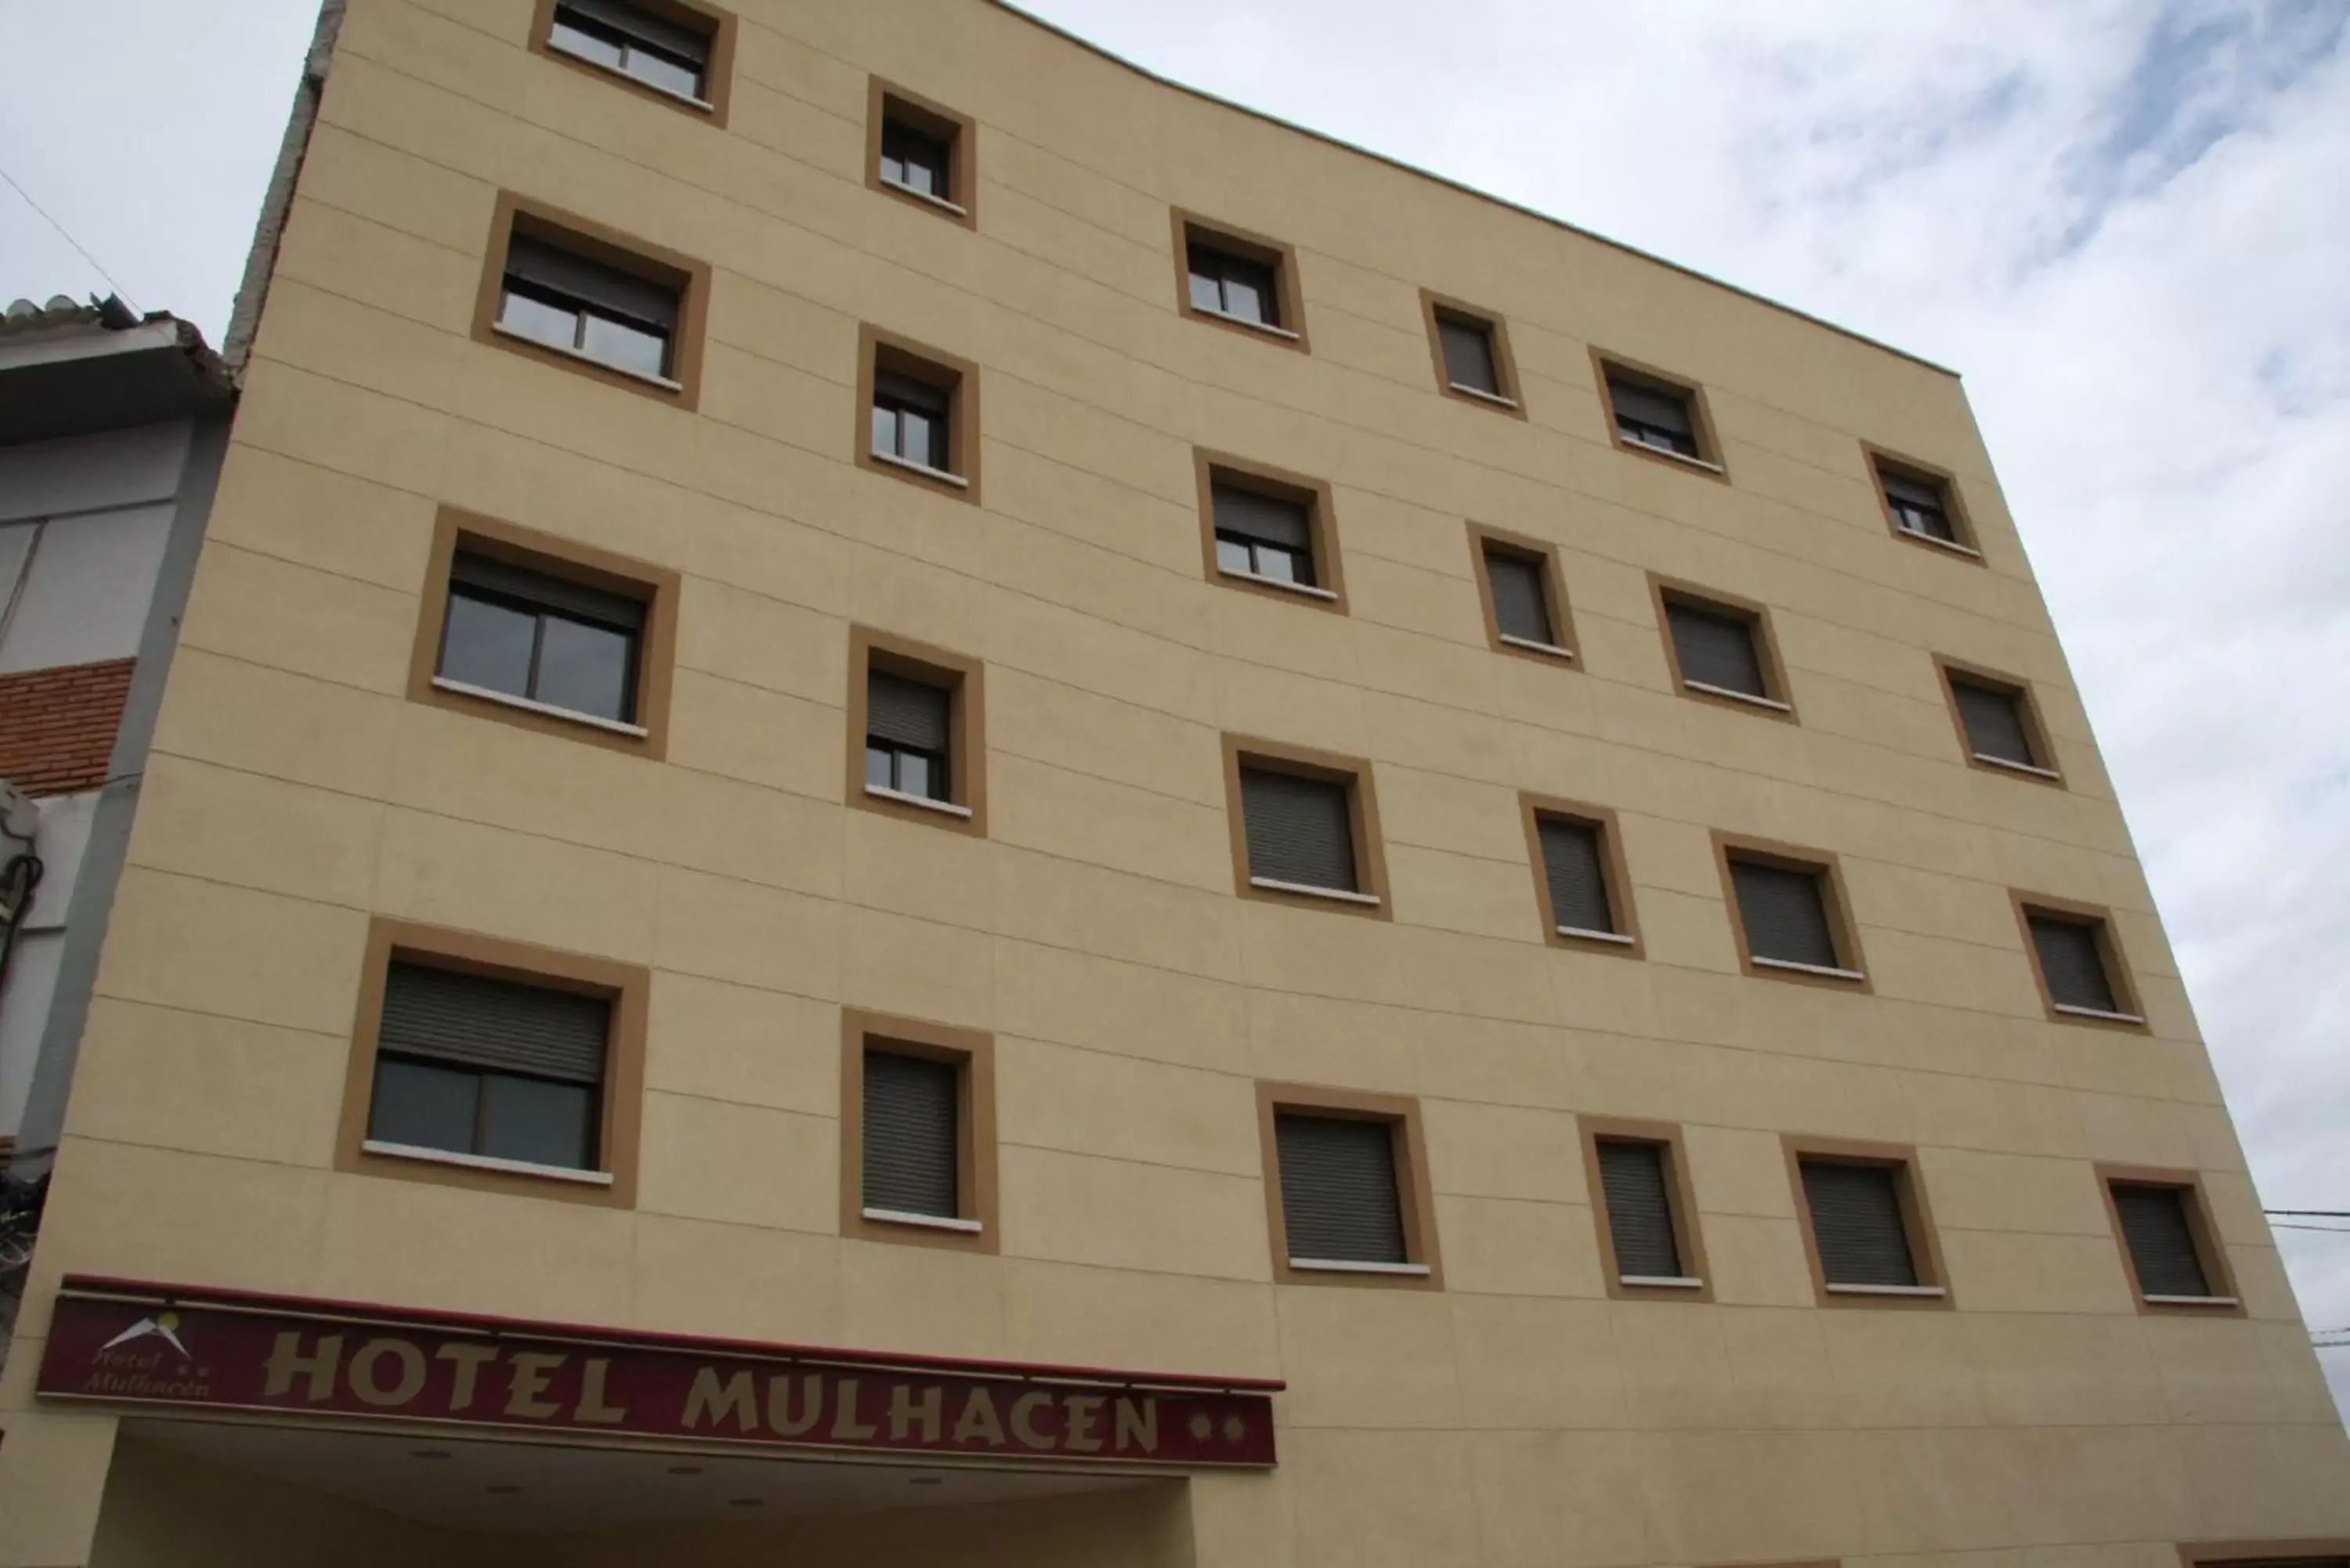 Facade/entrance, Property Building in Hotel Mulhacen